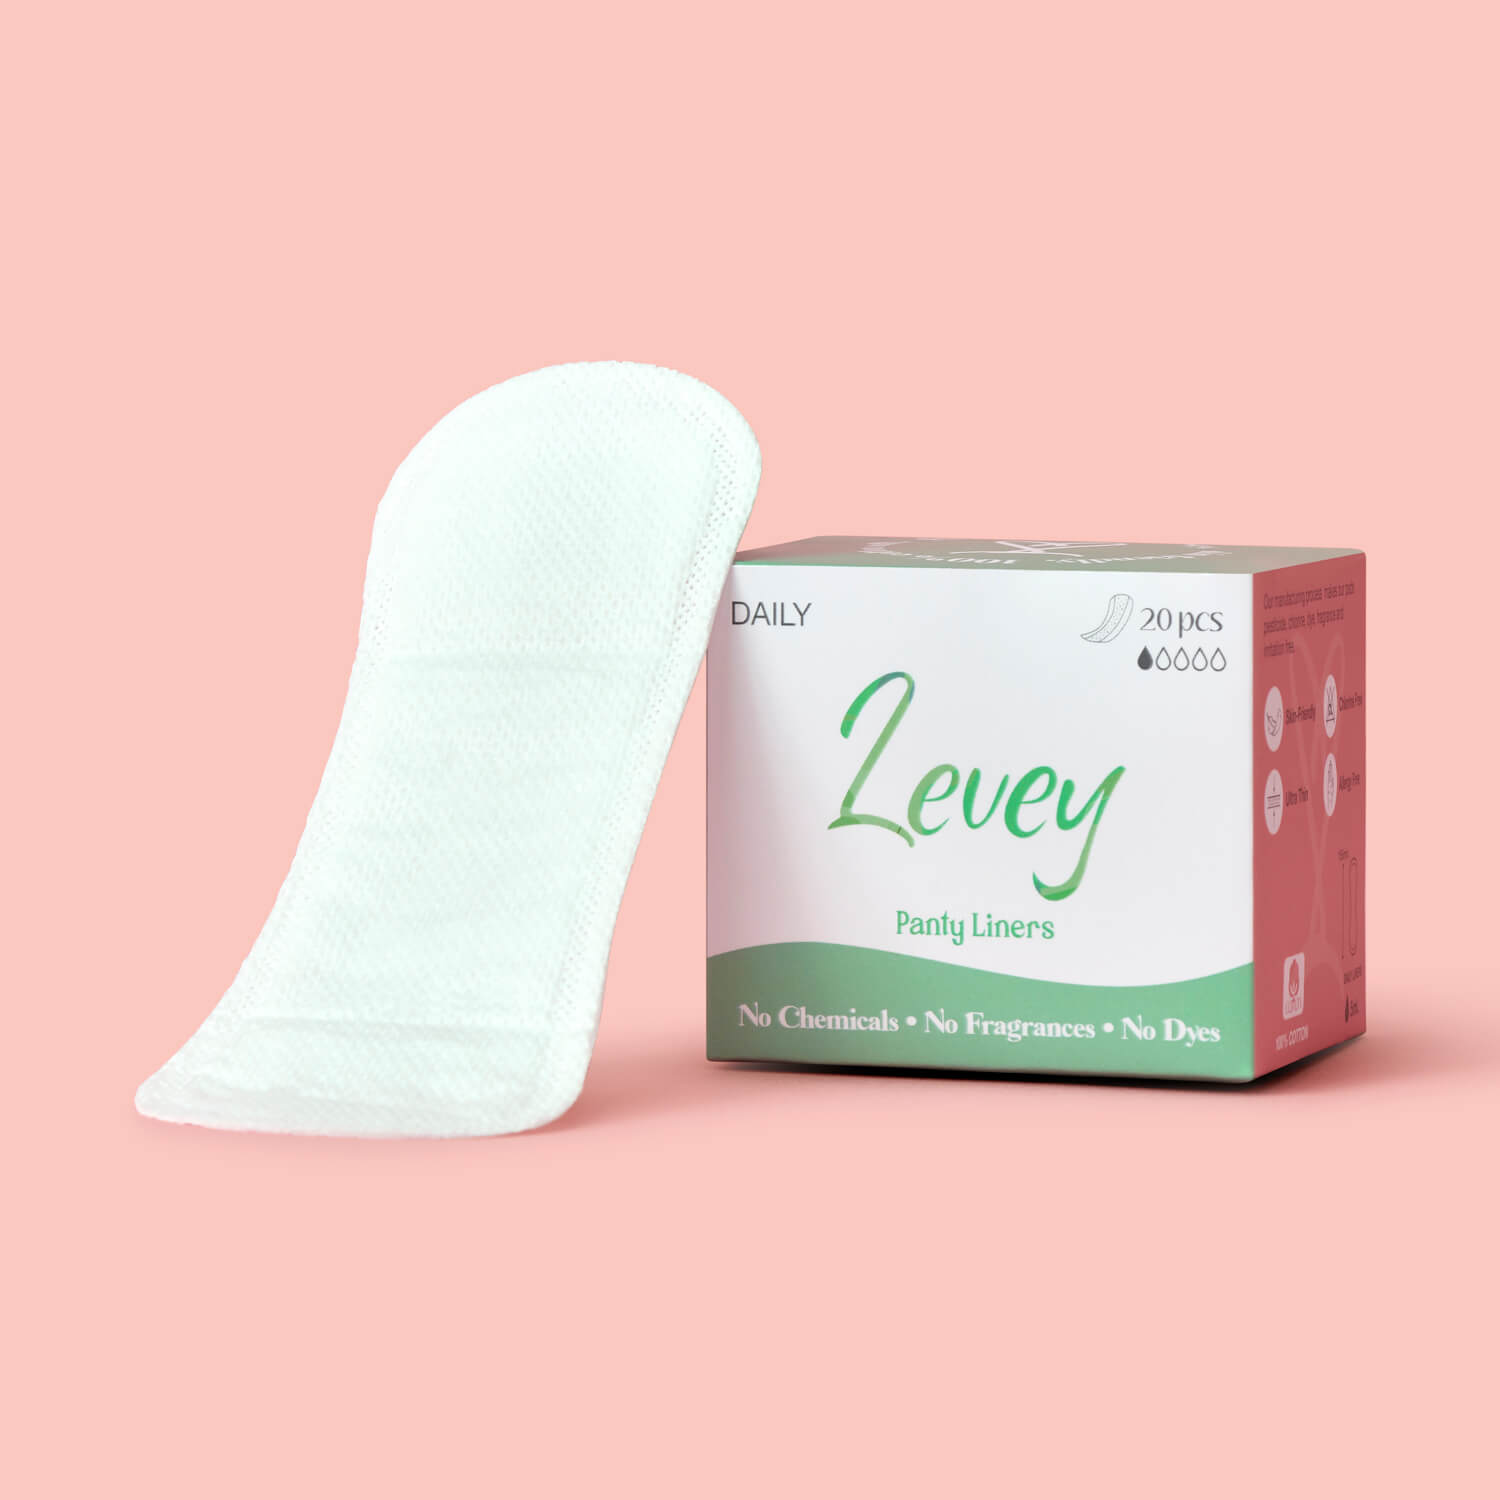 Levey packaging design